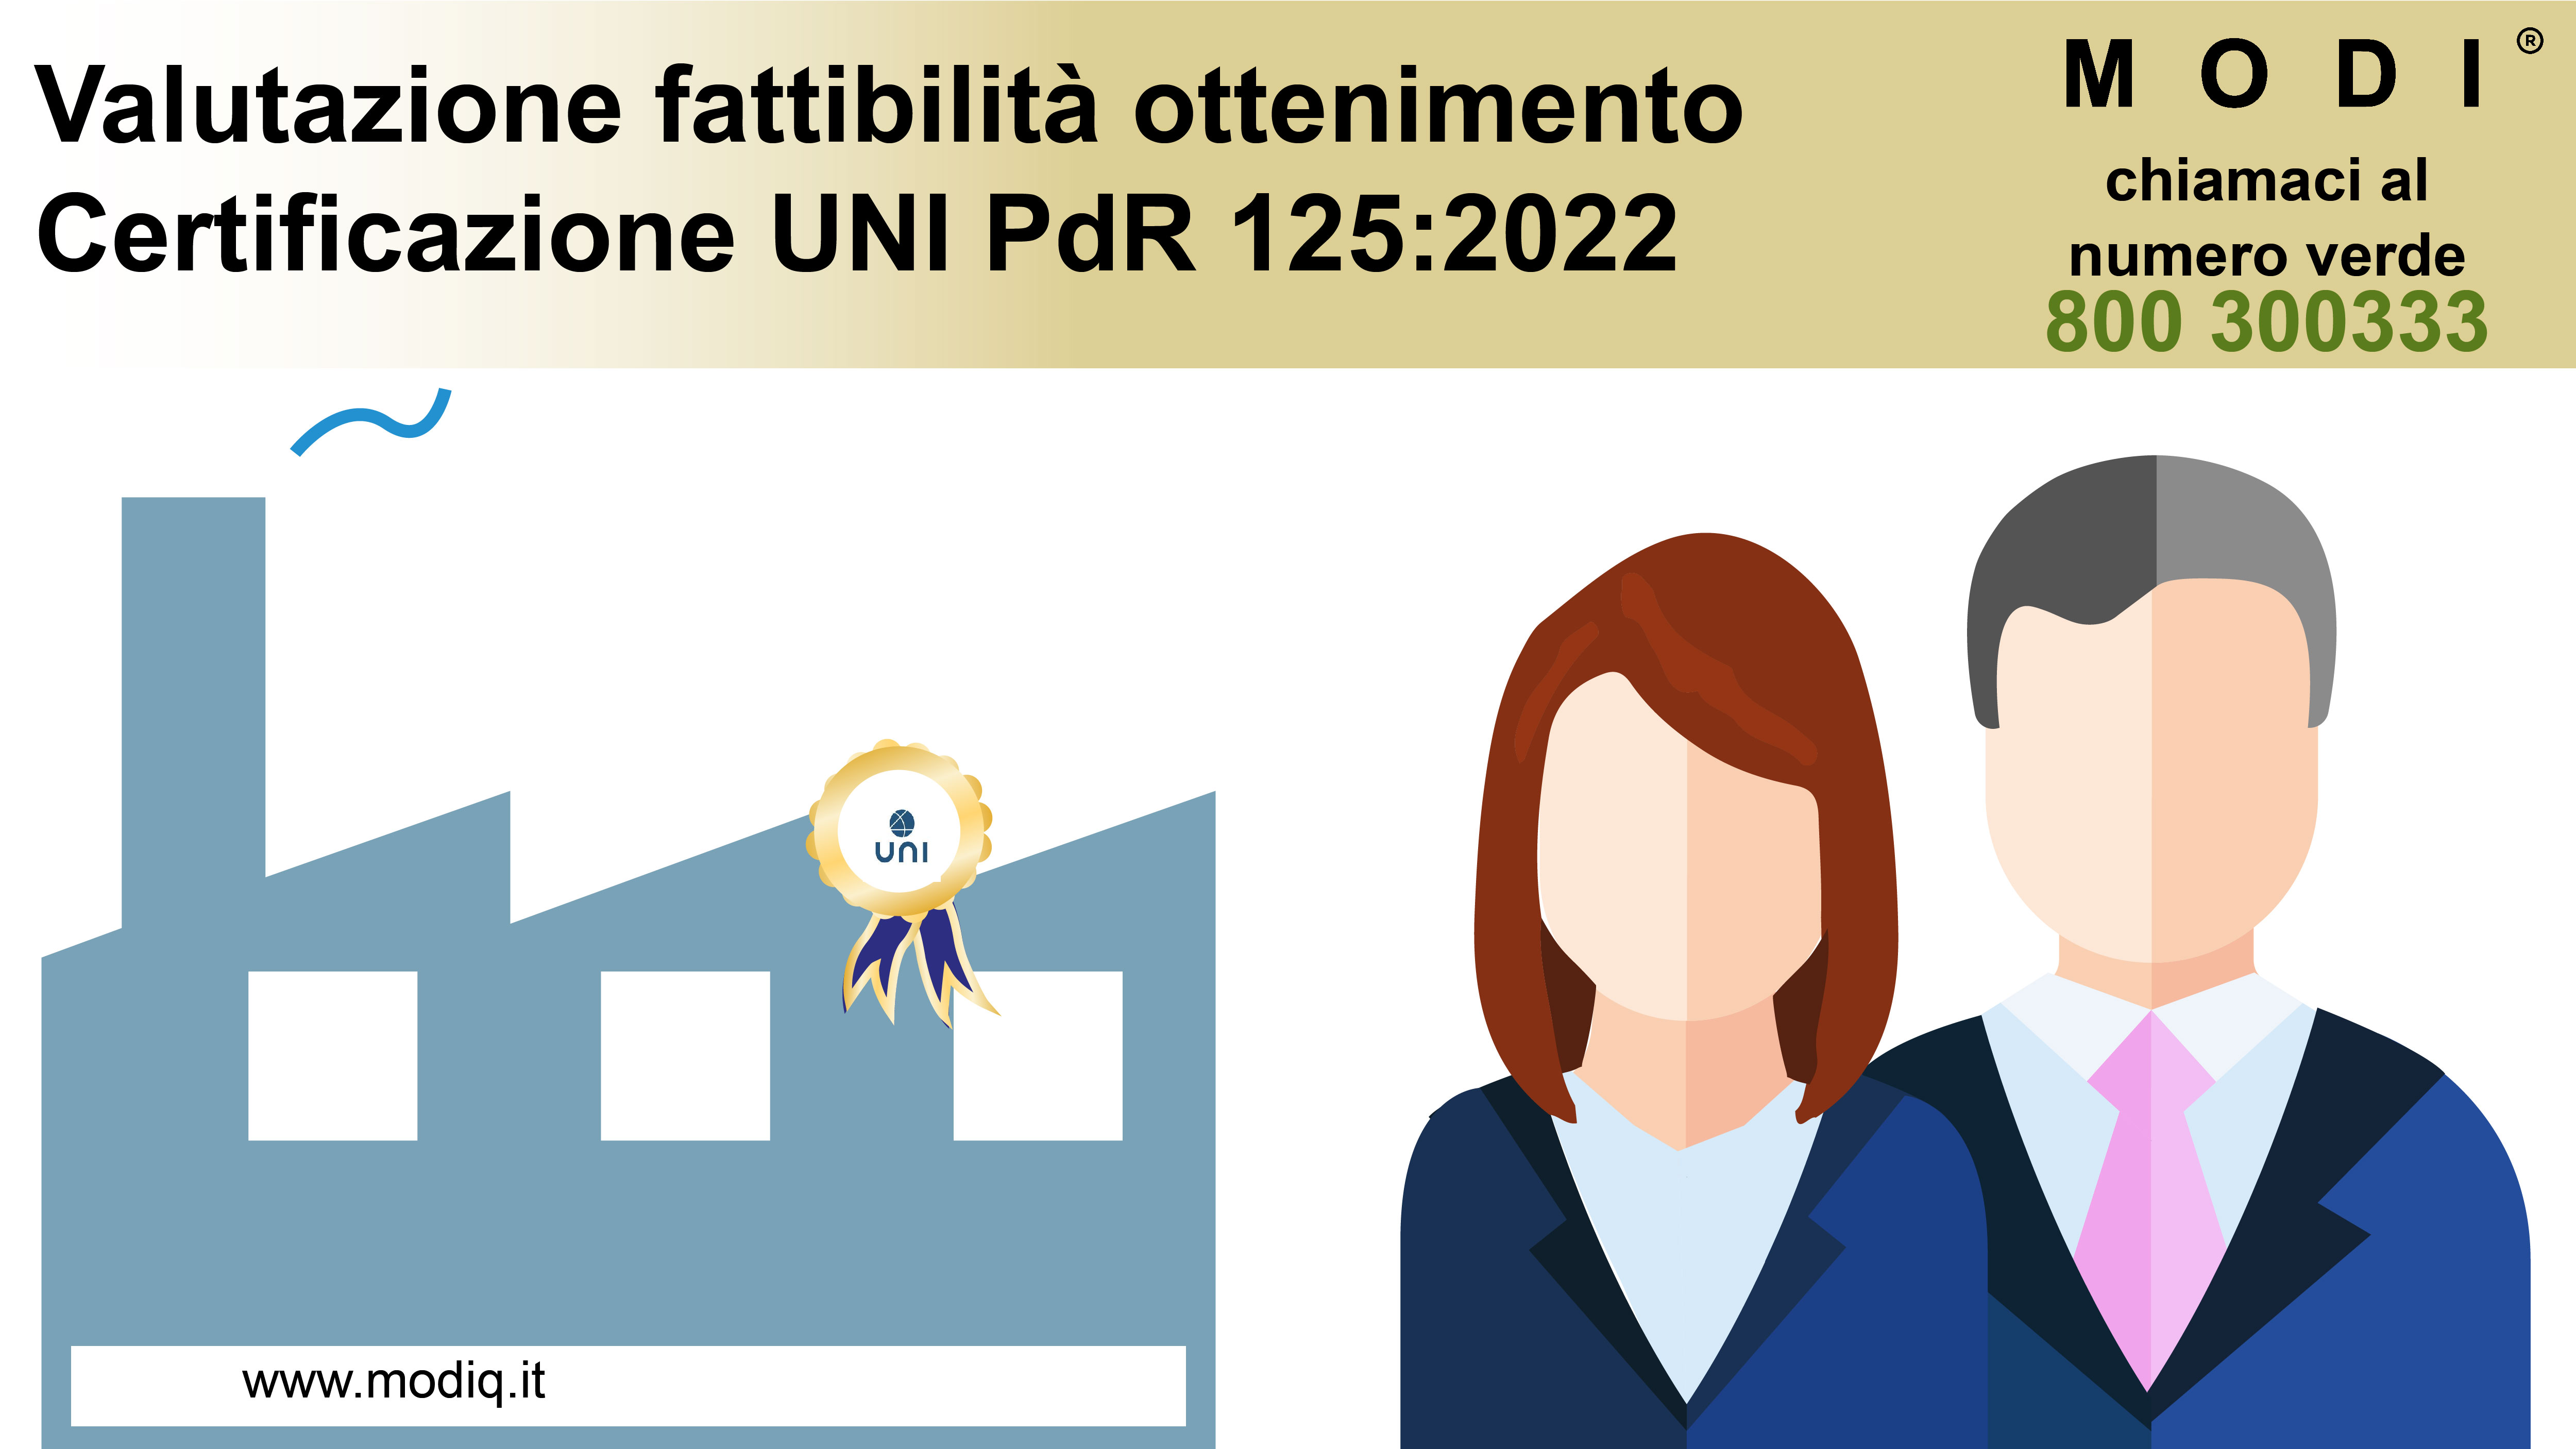 Certificazione UNI/PdR 125:2022